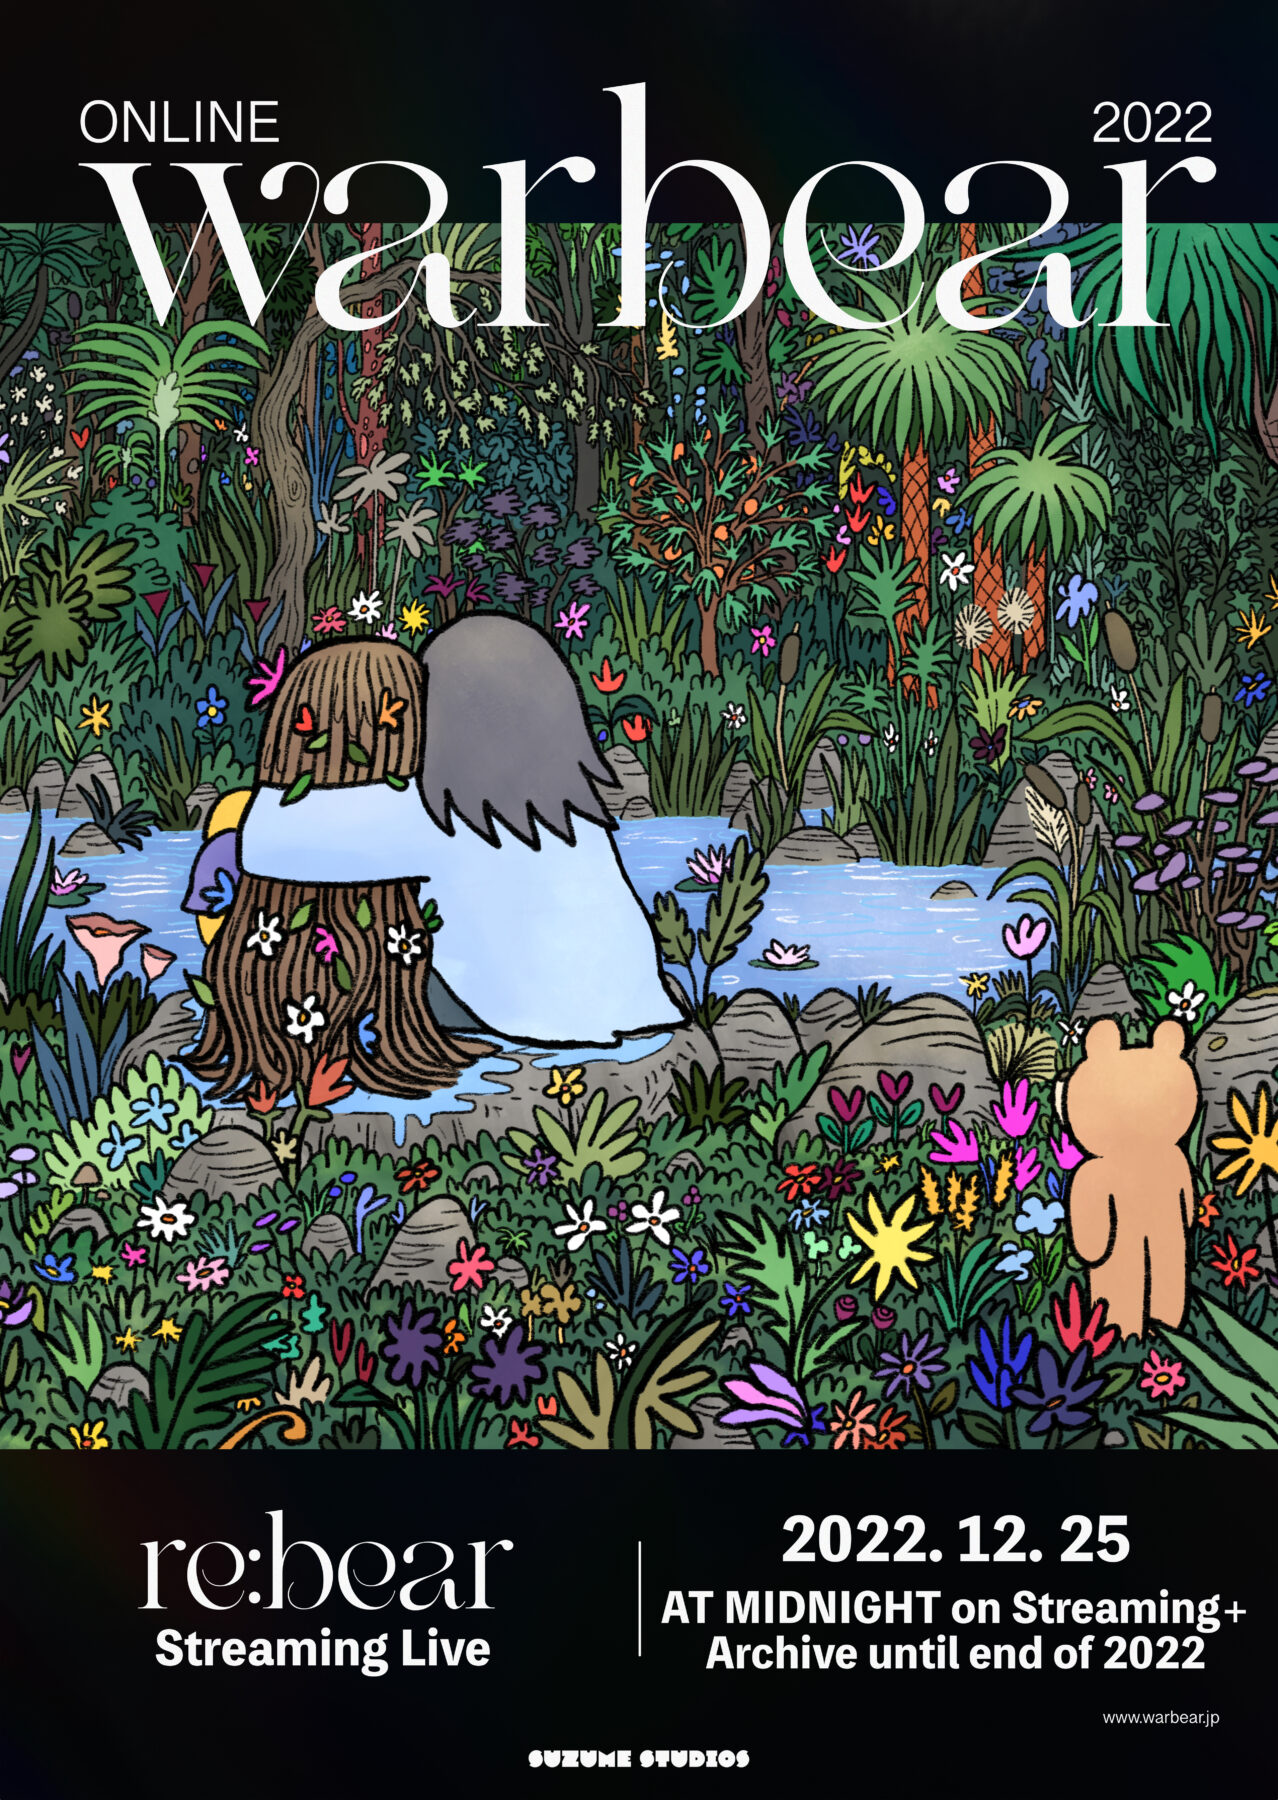 warbear “re:bear” Streaming Live